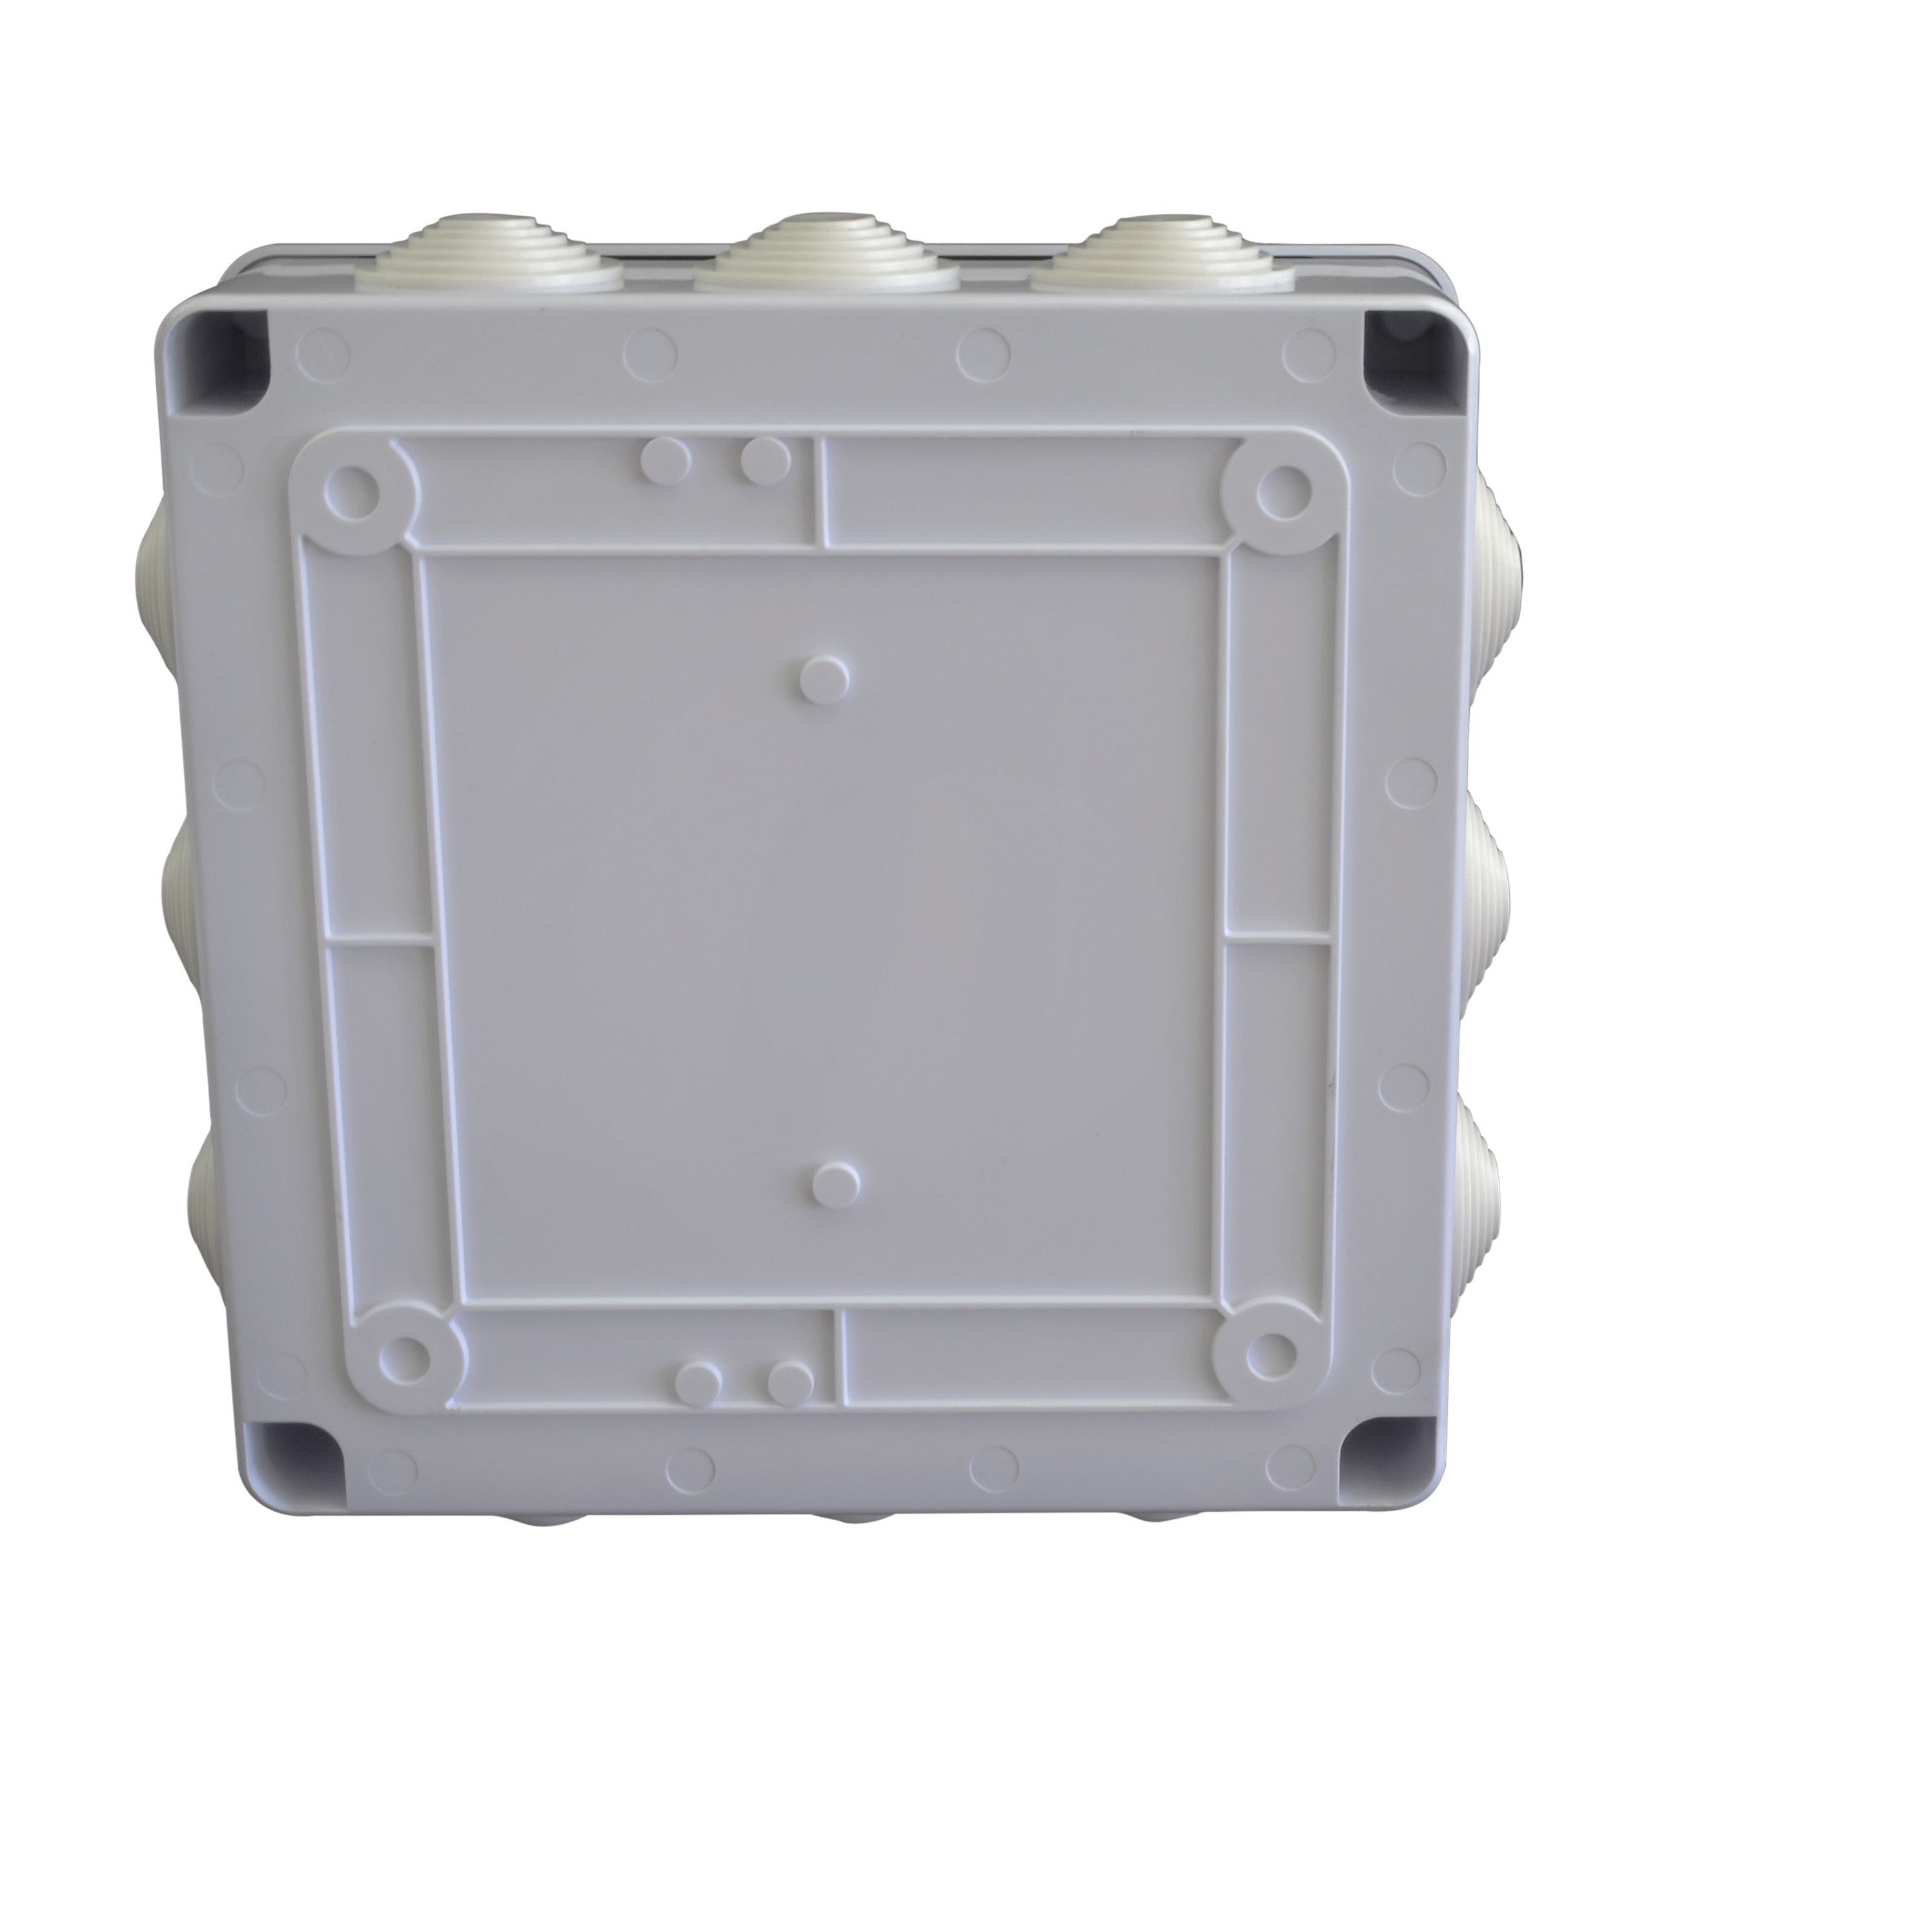 200x200x80 mm ABS Plastic IP65 Waterproof Junction Box – Twin